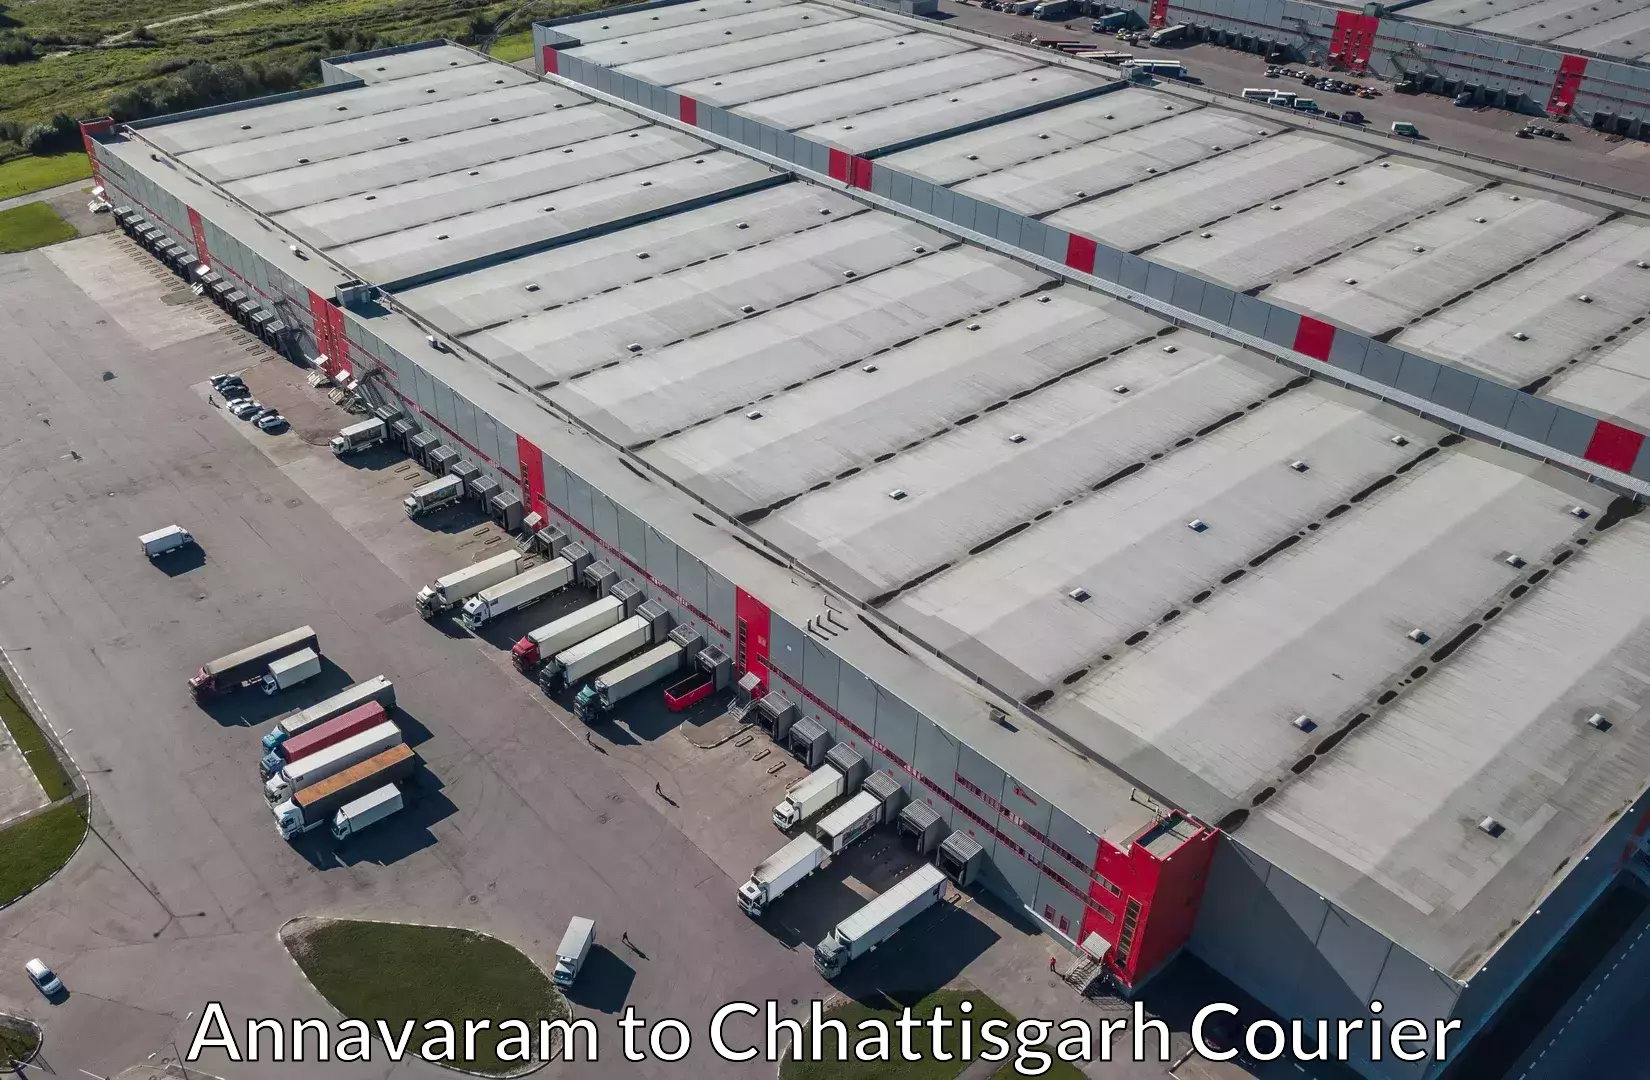 Furniture relocation experts Annavaram to Chhattisgarh